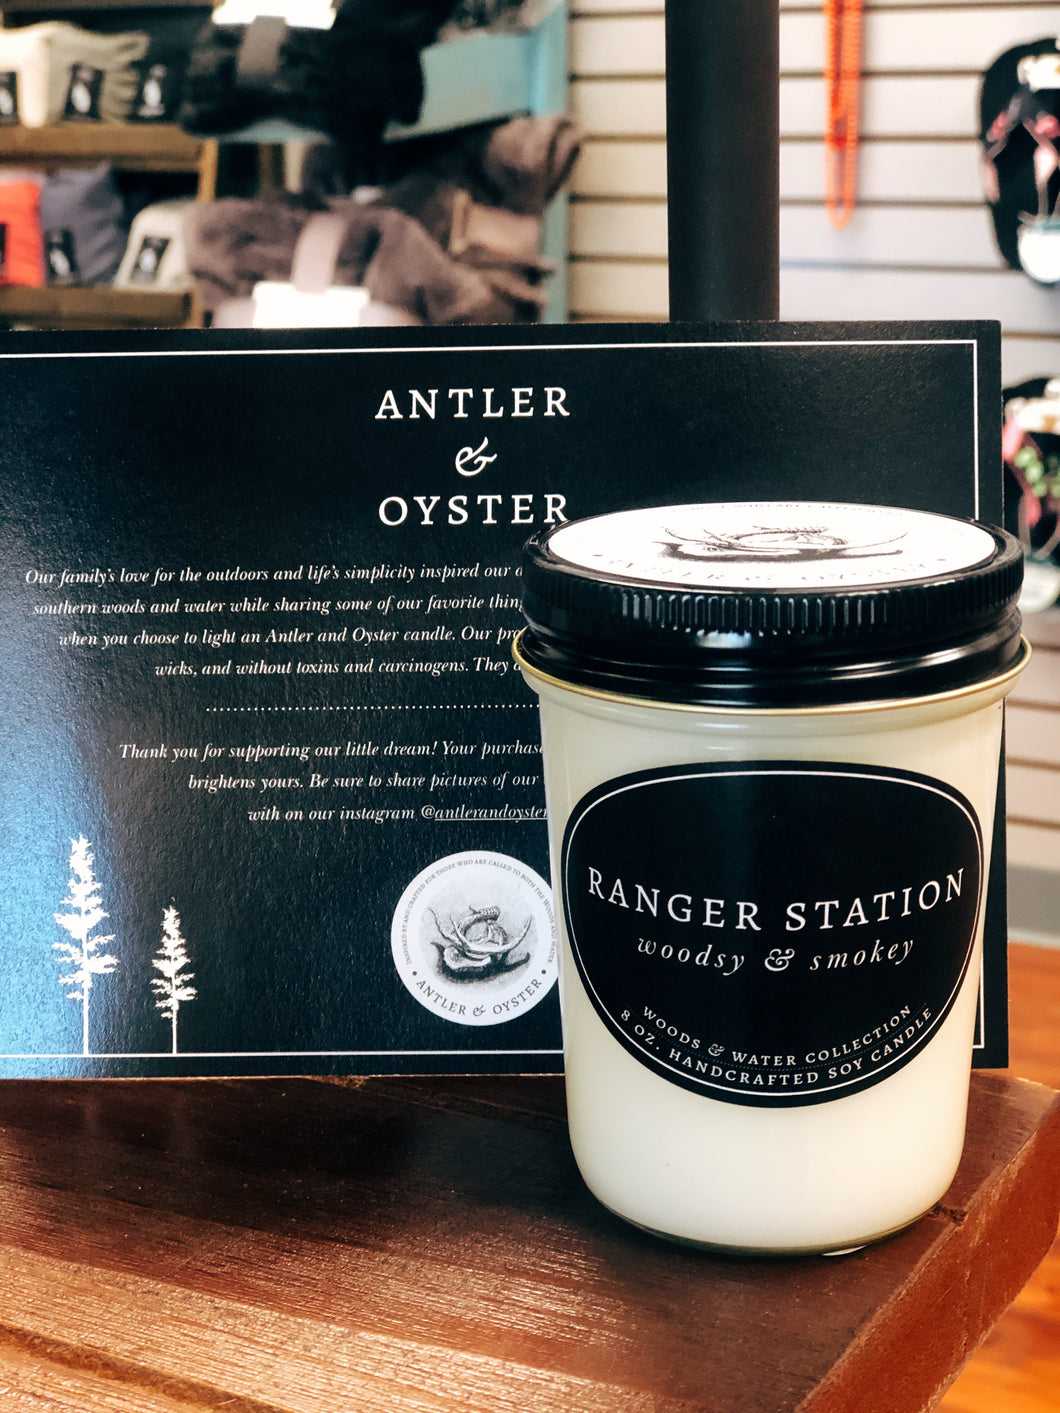 Antler & Oyster—Ranger Station